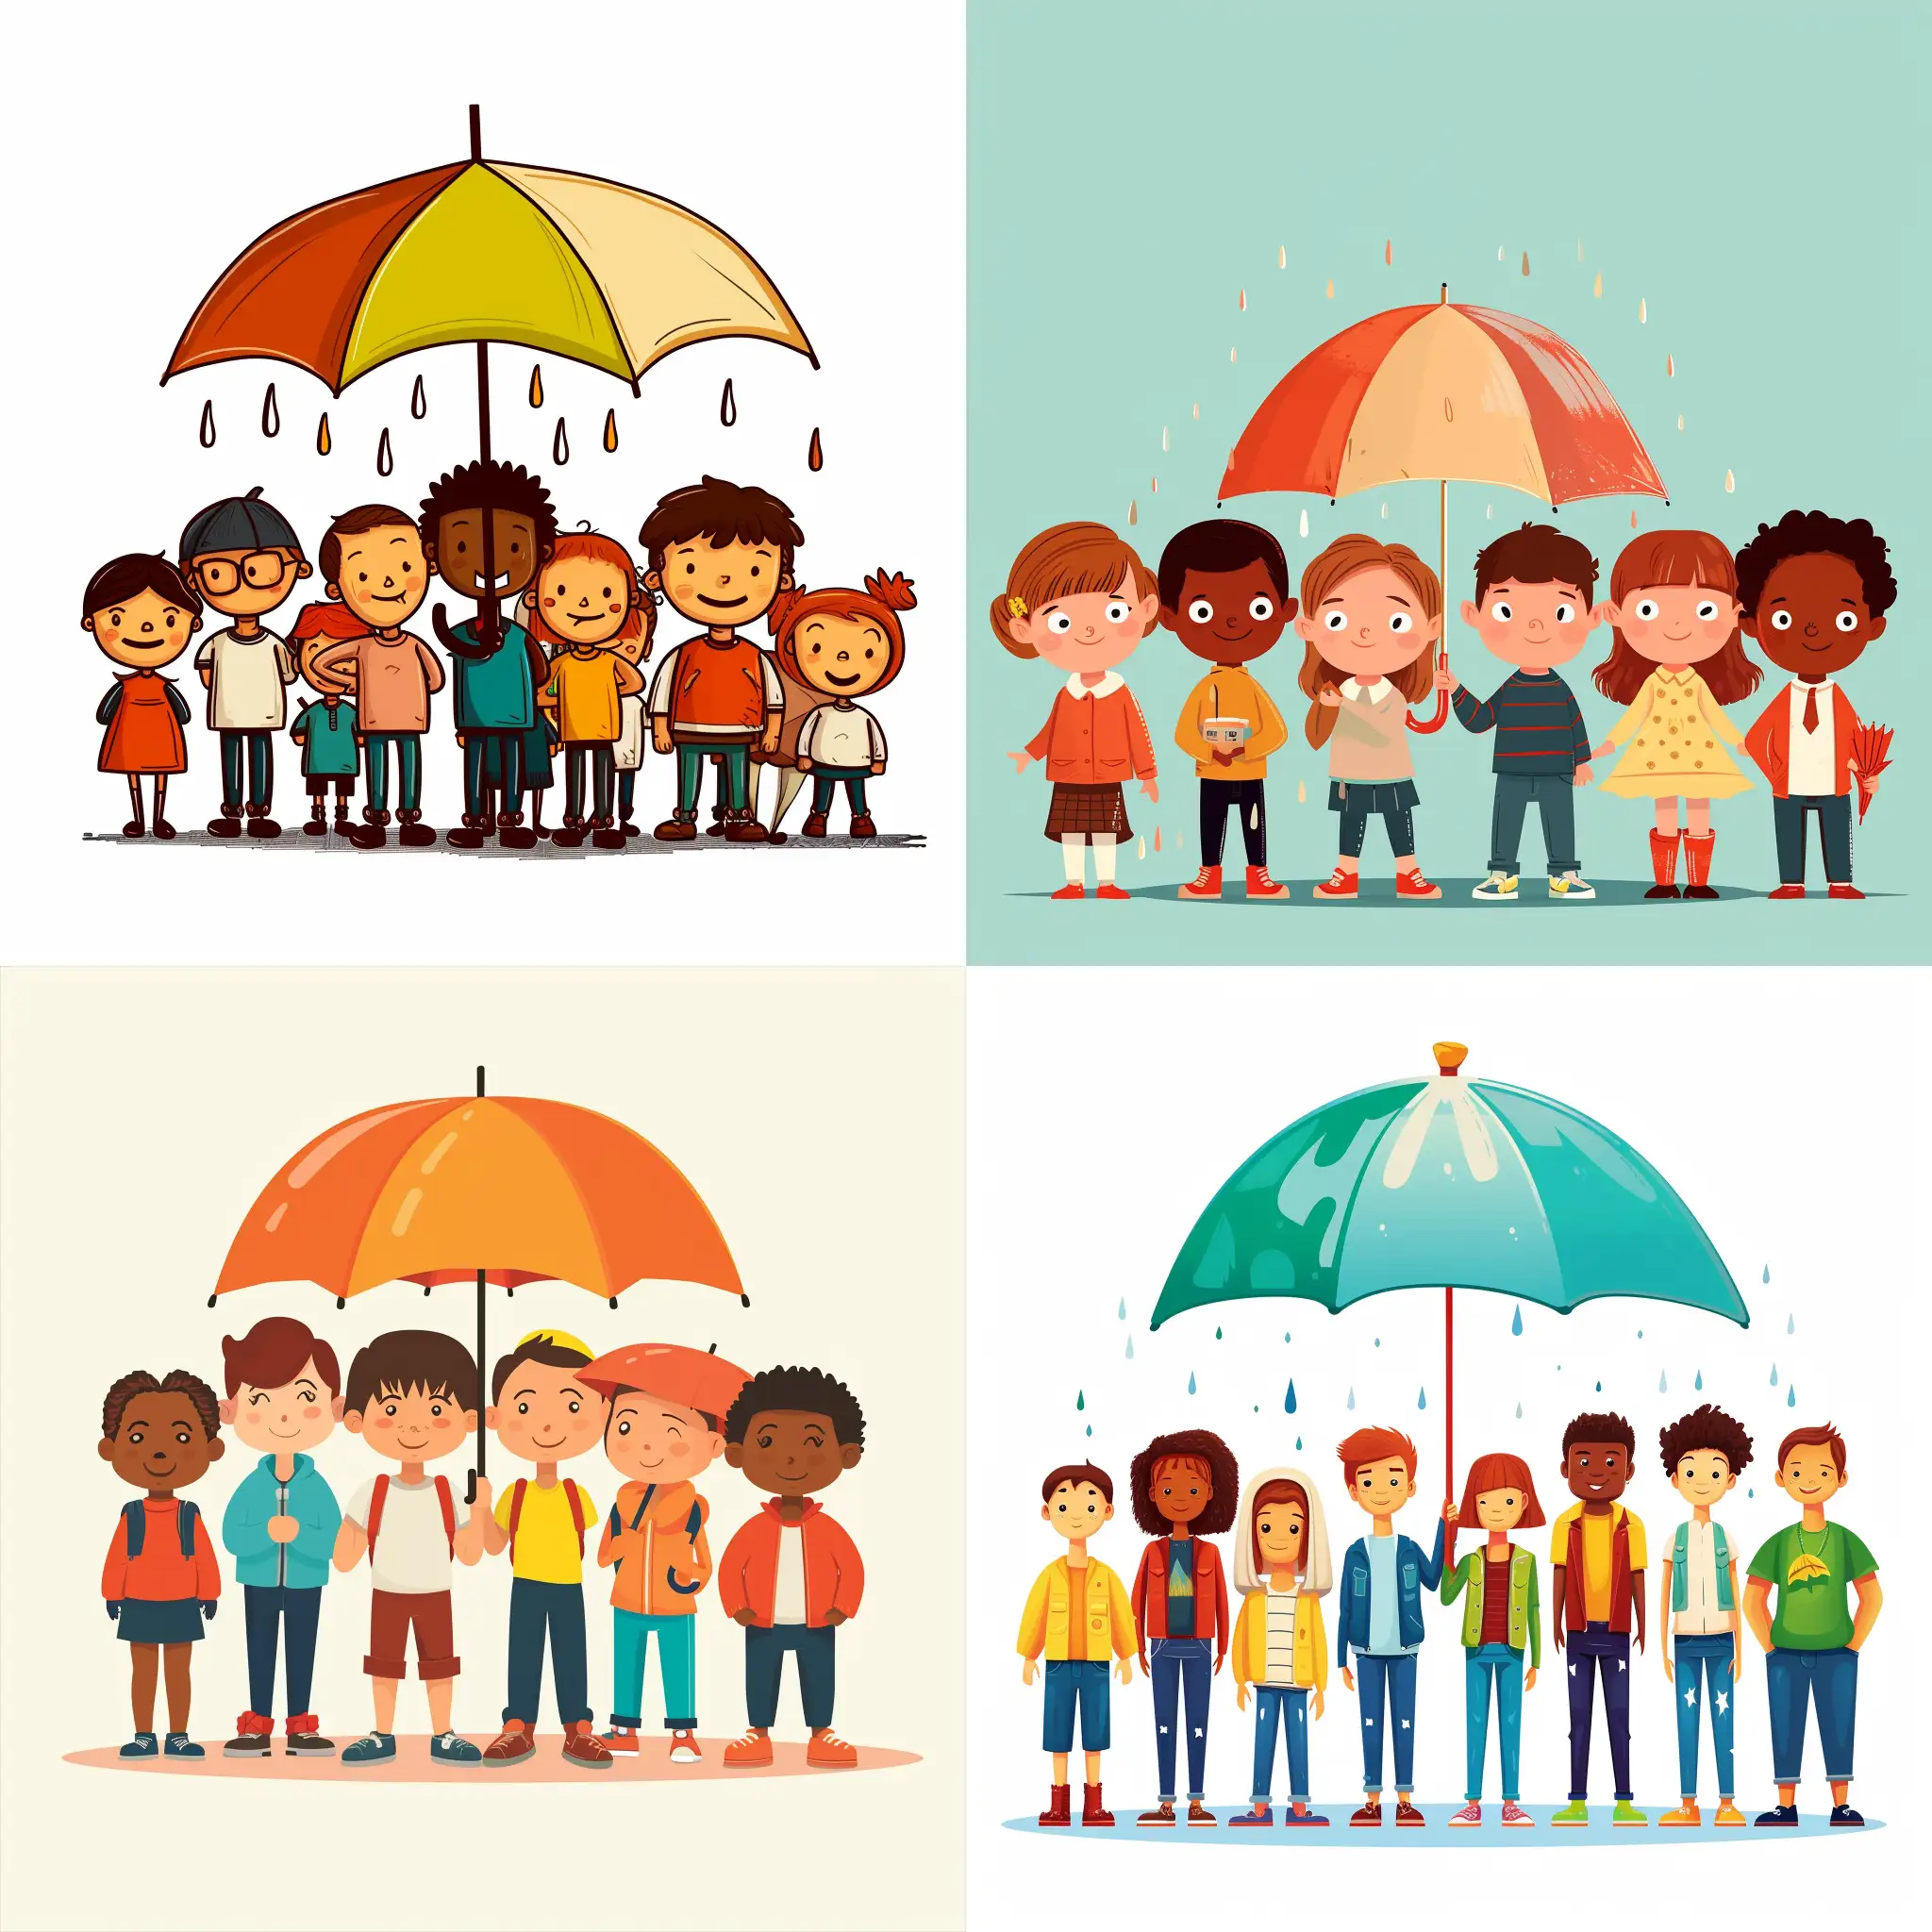 Joyful-Cartoon-People-Sharing-an-Umbrella-in-Harmonious-Unity